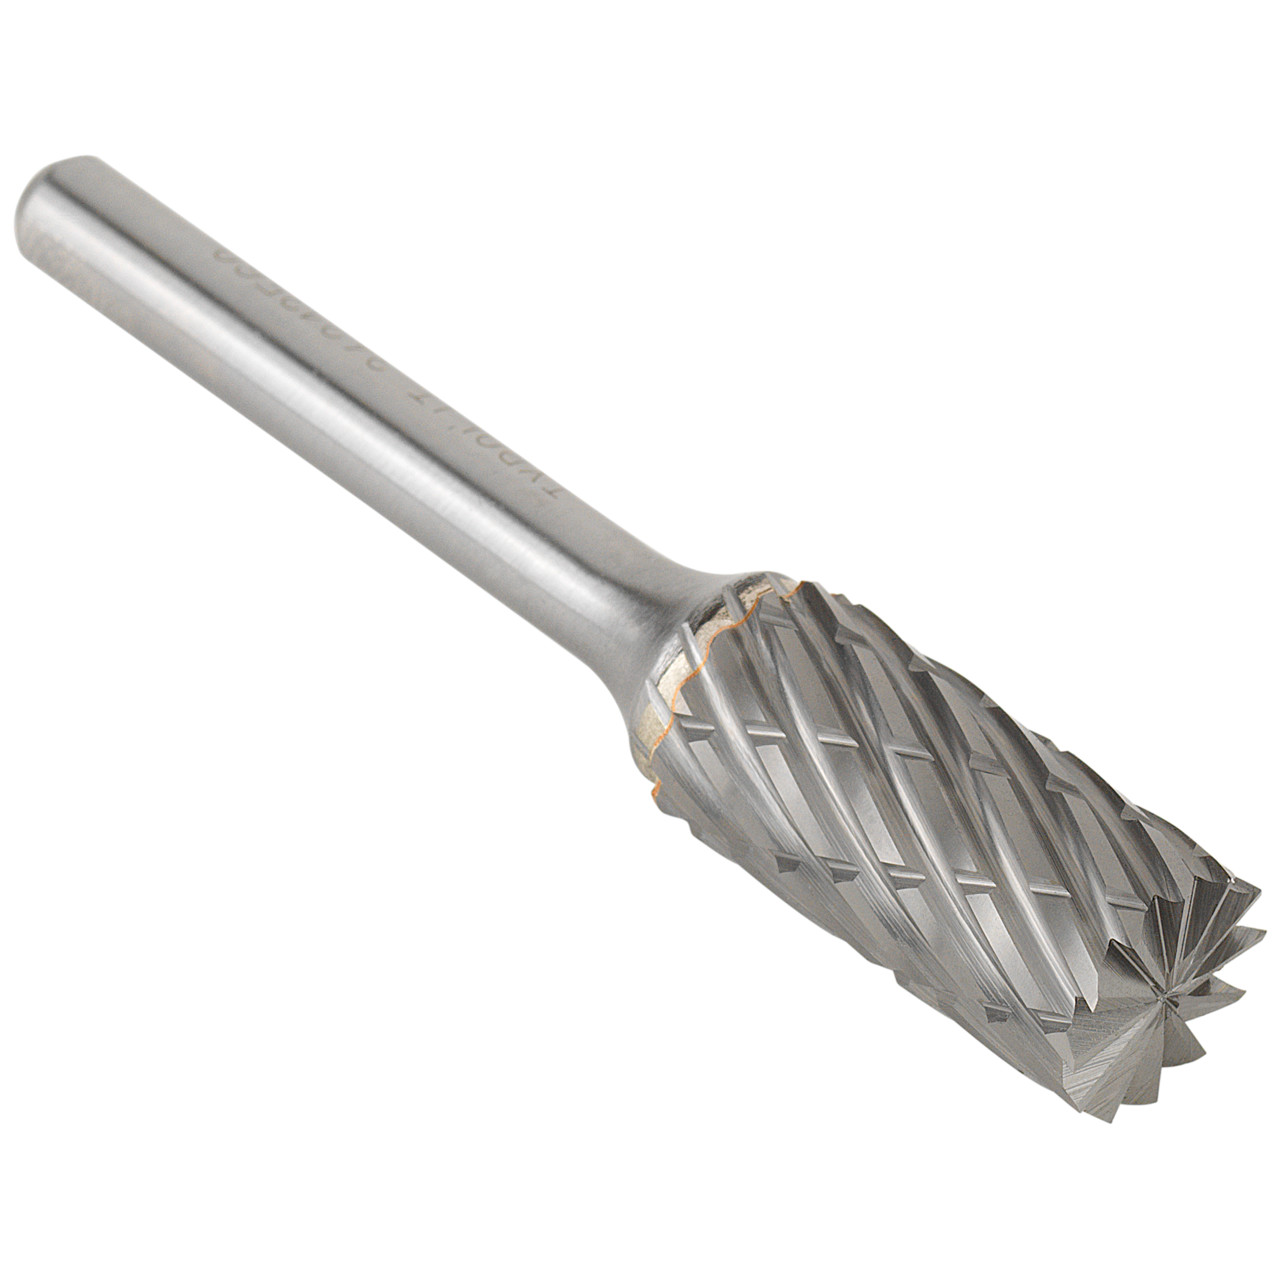 Tyrolit Fresa de metal duro DxT-SxL 13x25-6x70 Para acero, forma: 52ZYAS - cilindro con dentado frontal, Art. 34213560